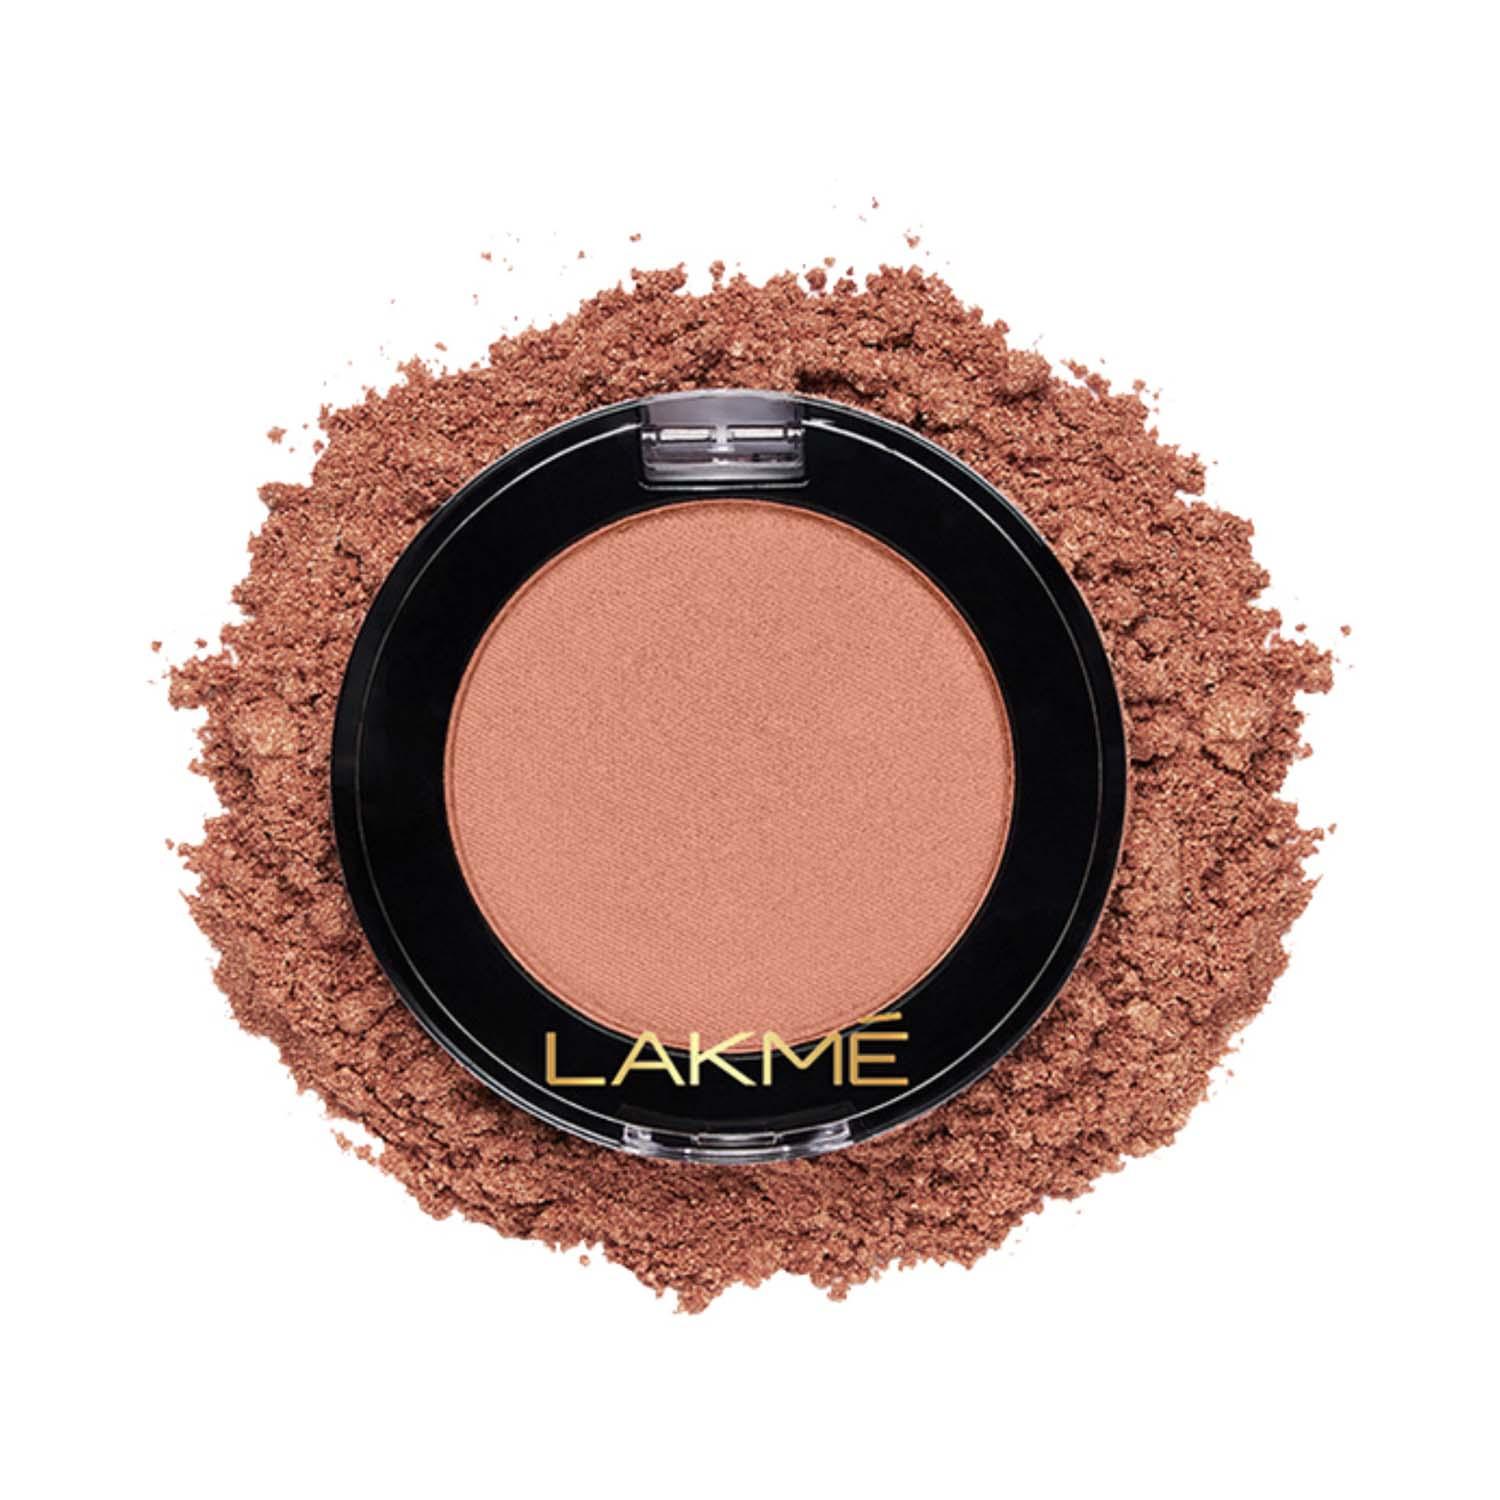 Lakme | Lakme Face It Highlighter - H1 Bronze (4g)